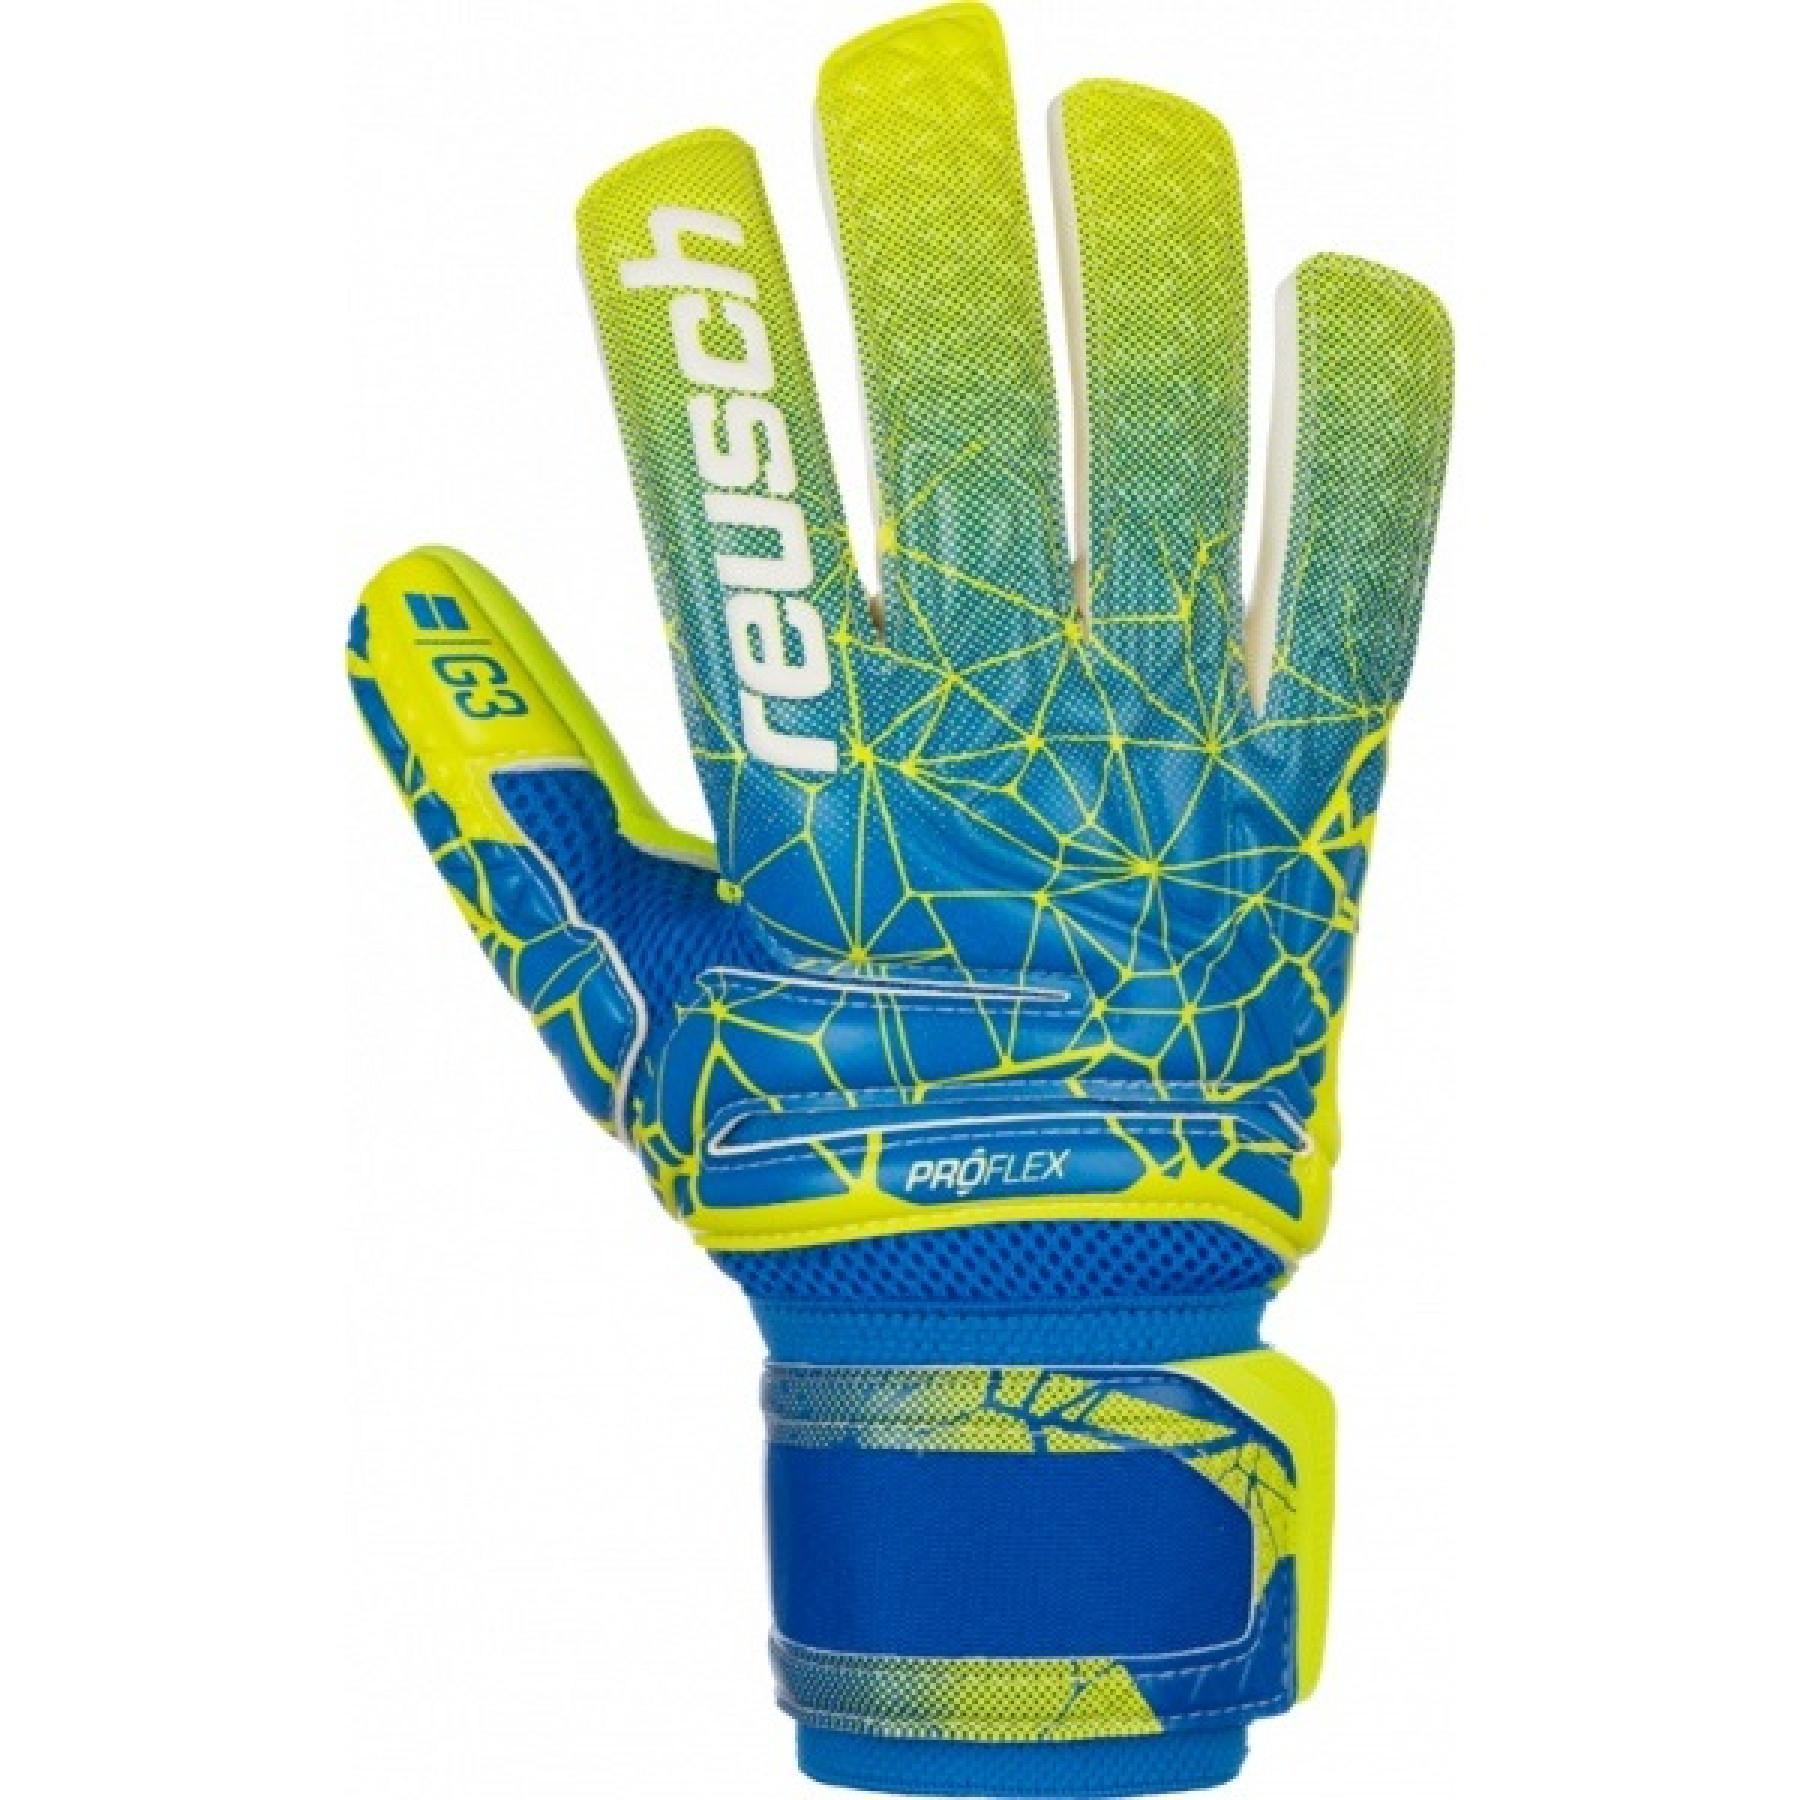 Goalkeeper gloves Reusch Fit Control Pro G3 Coupe négative 2019